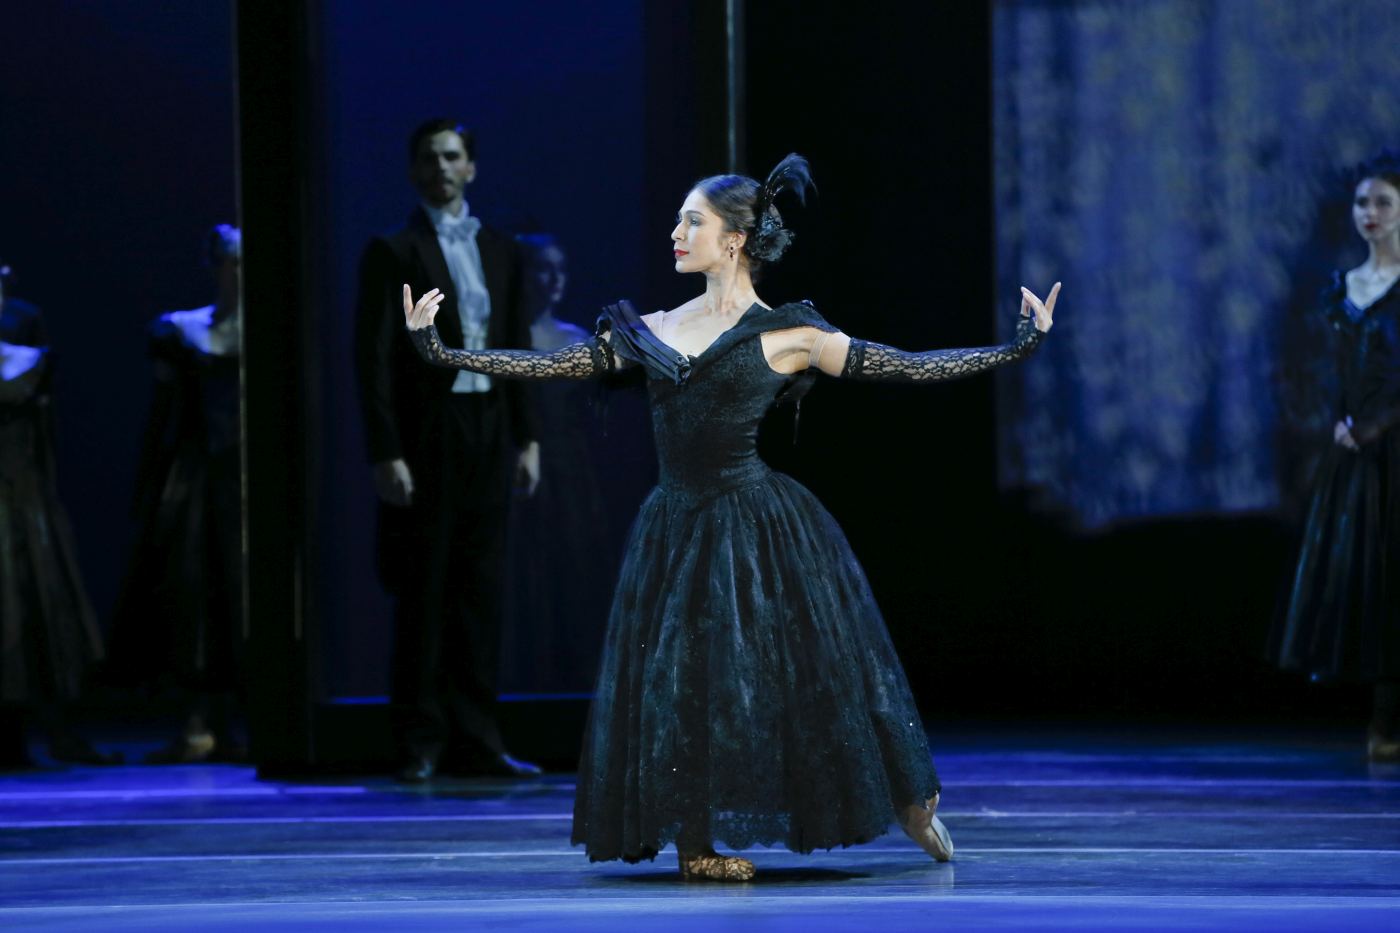 4. R.Hendricks (Anna Karenina) and ensemble, “Anna Karenina” by Y.Possokhov, The Australian Ballet 2022 © J.Busby